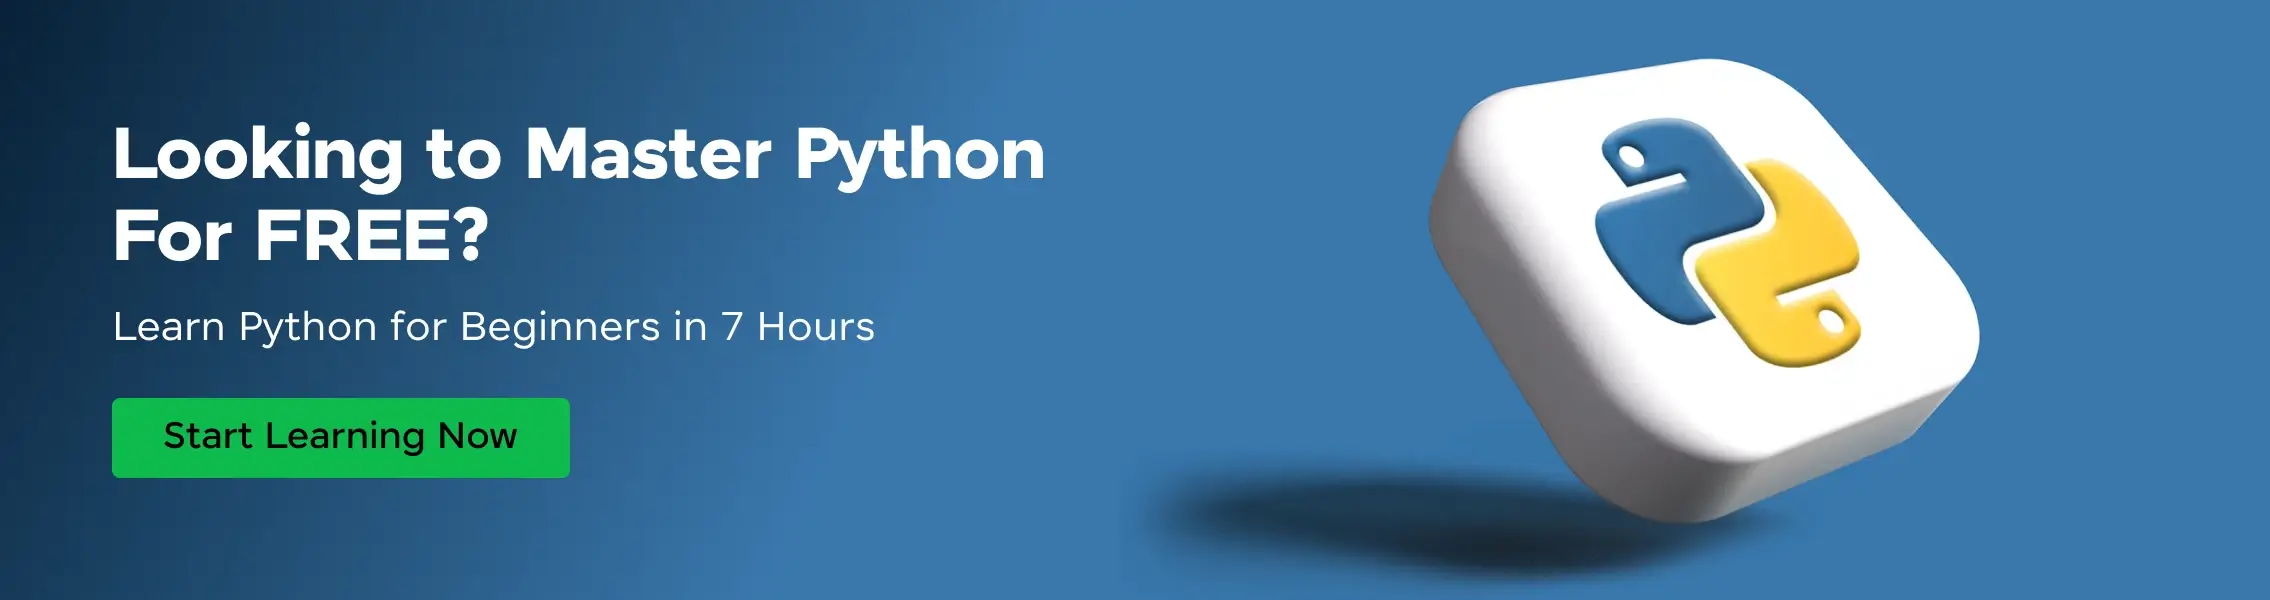 python course desktop banner horizontal